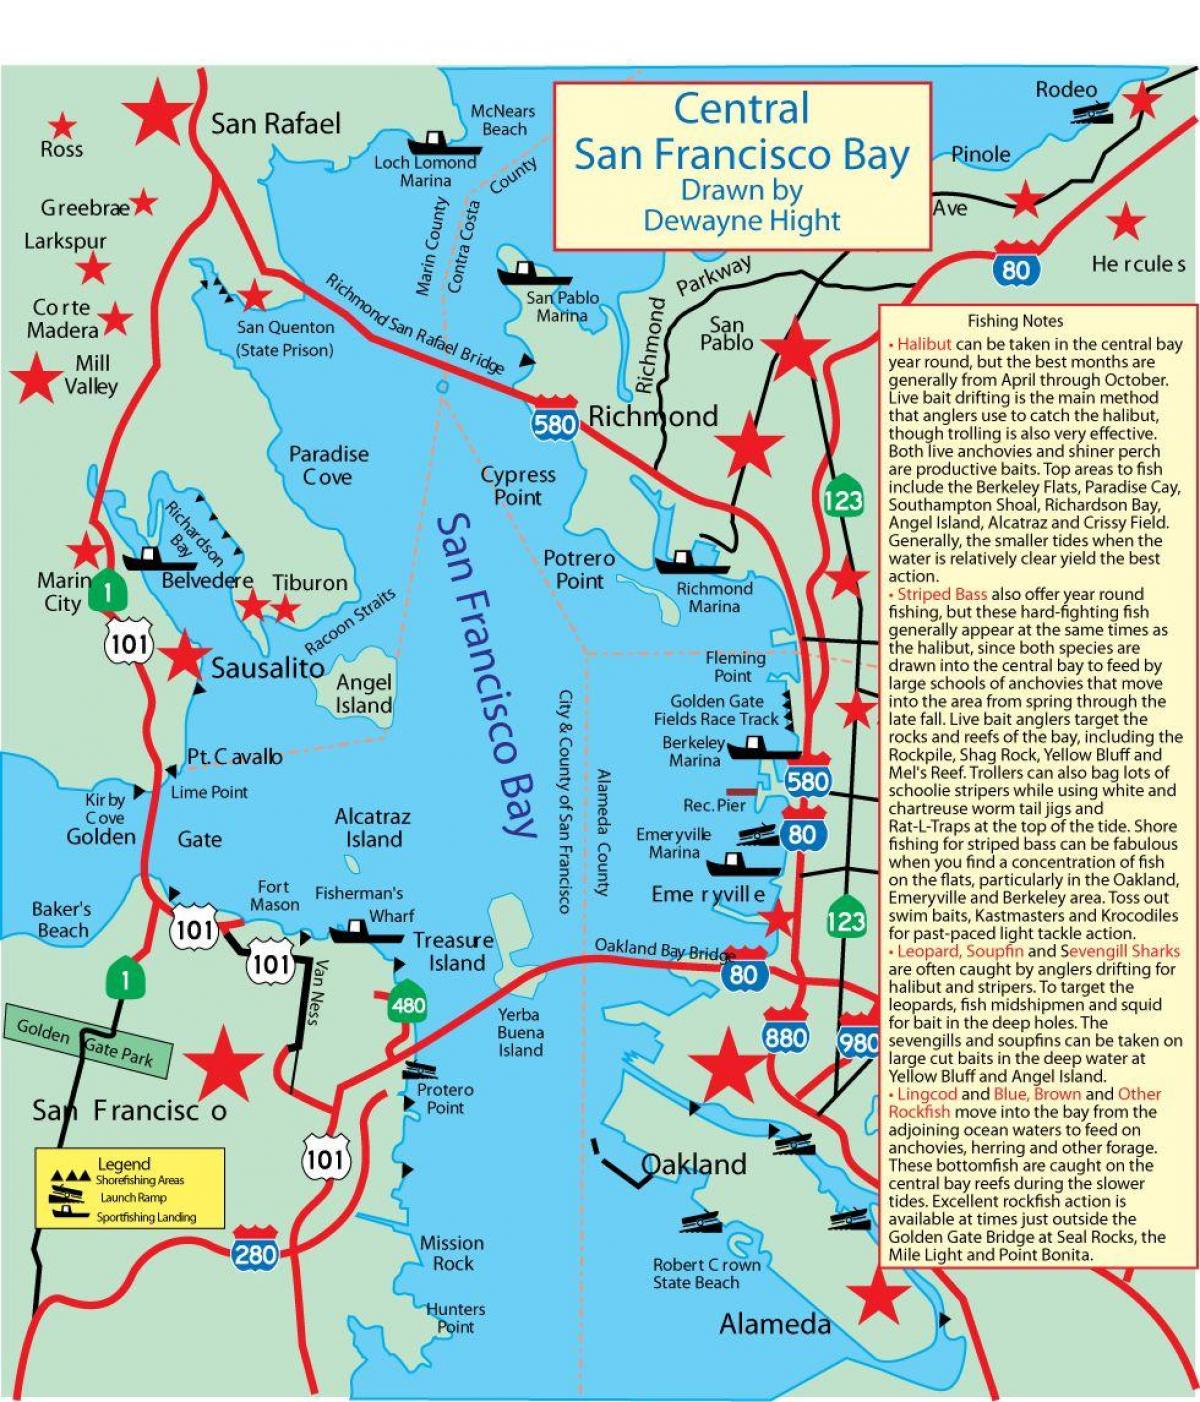 Mapu San Francisco bay rybolov 